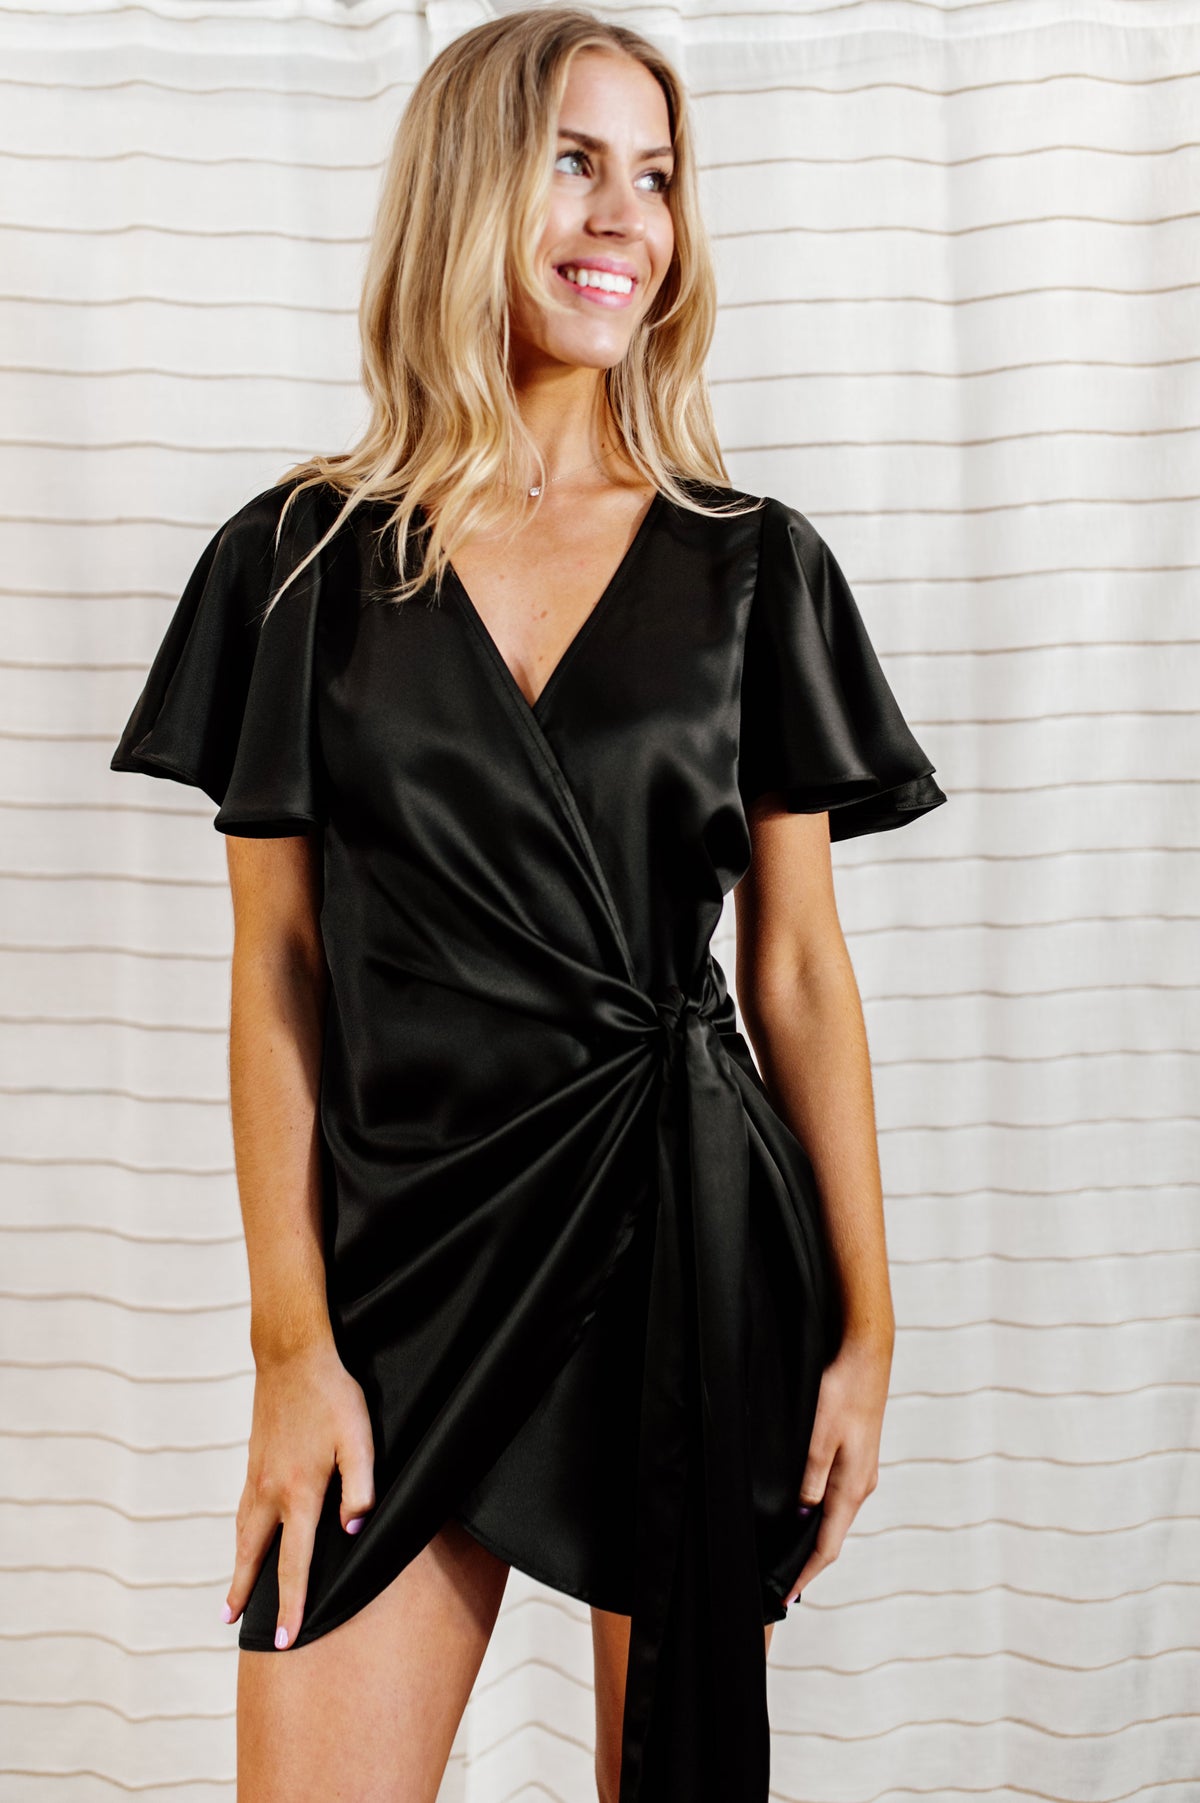 SWAK Designs Sexy Black Eternity Wrap Short Dress, Versatile Party Festive  Fun 